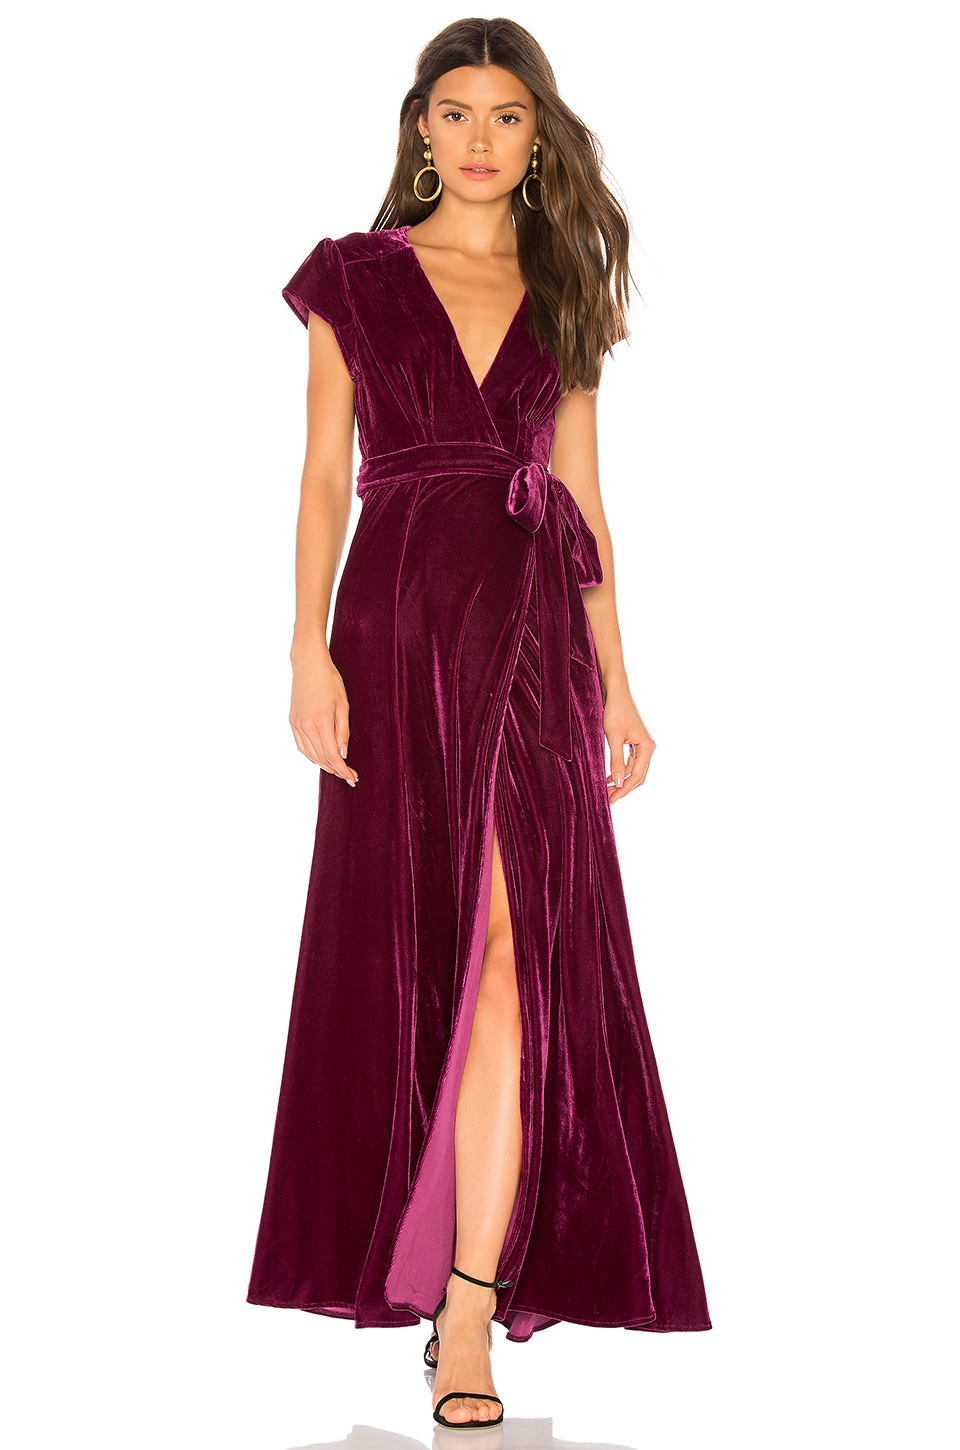 revolve burgundy dress